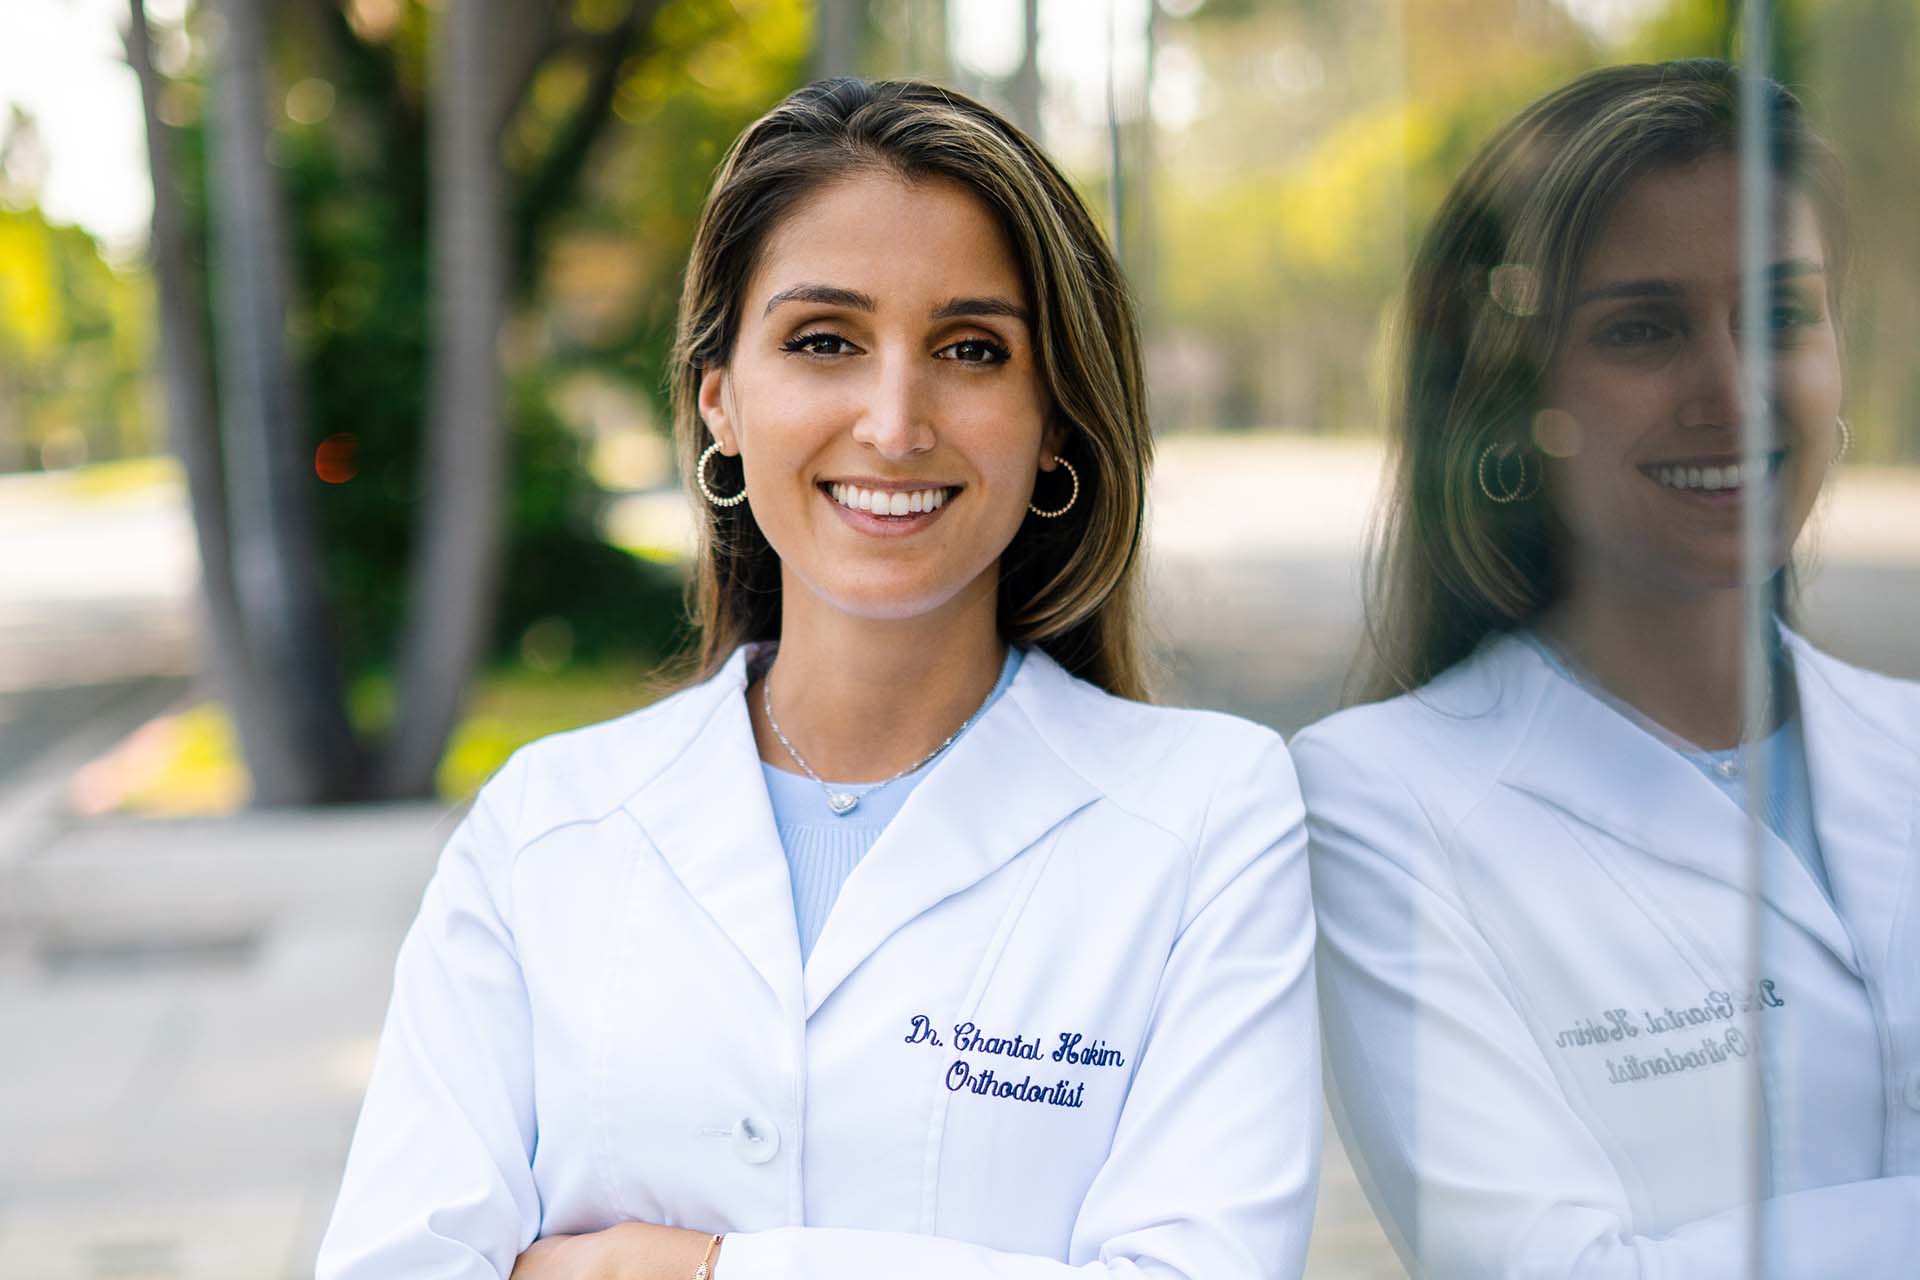 Dr Chantal Hakim of the Orthospaceship - Hakim Orthodontics serving Beverly Hills